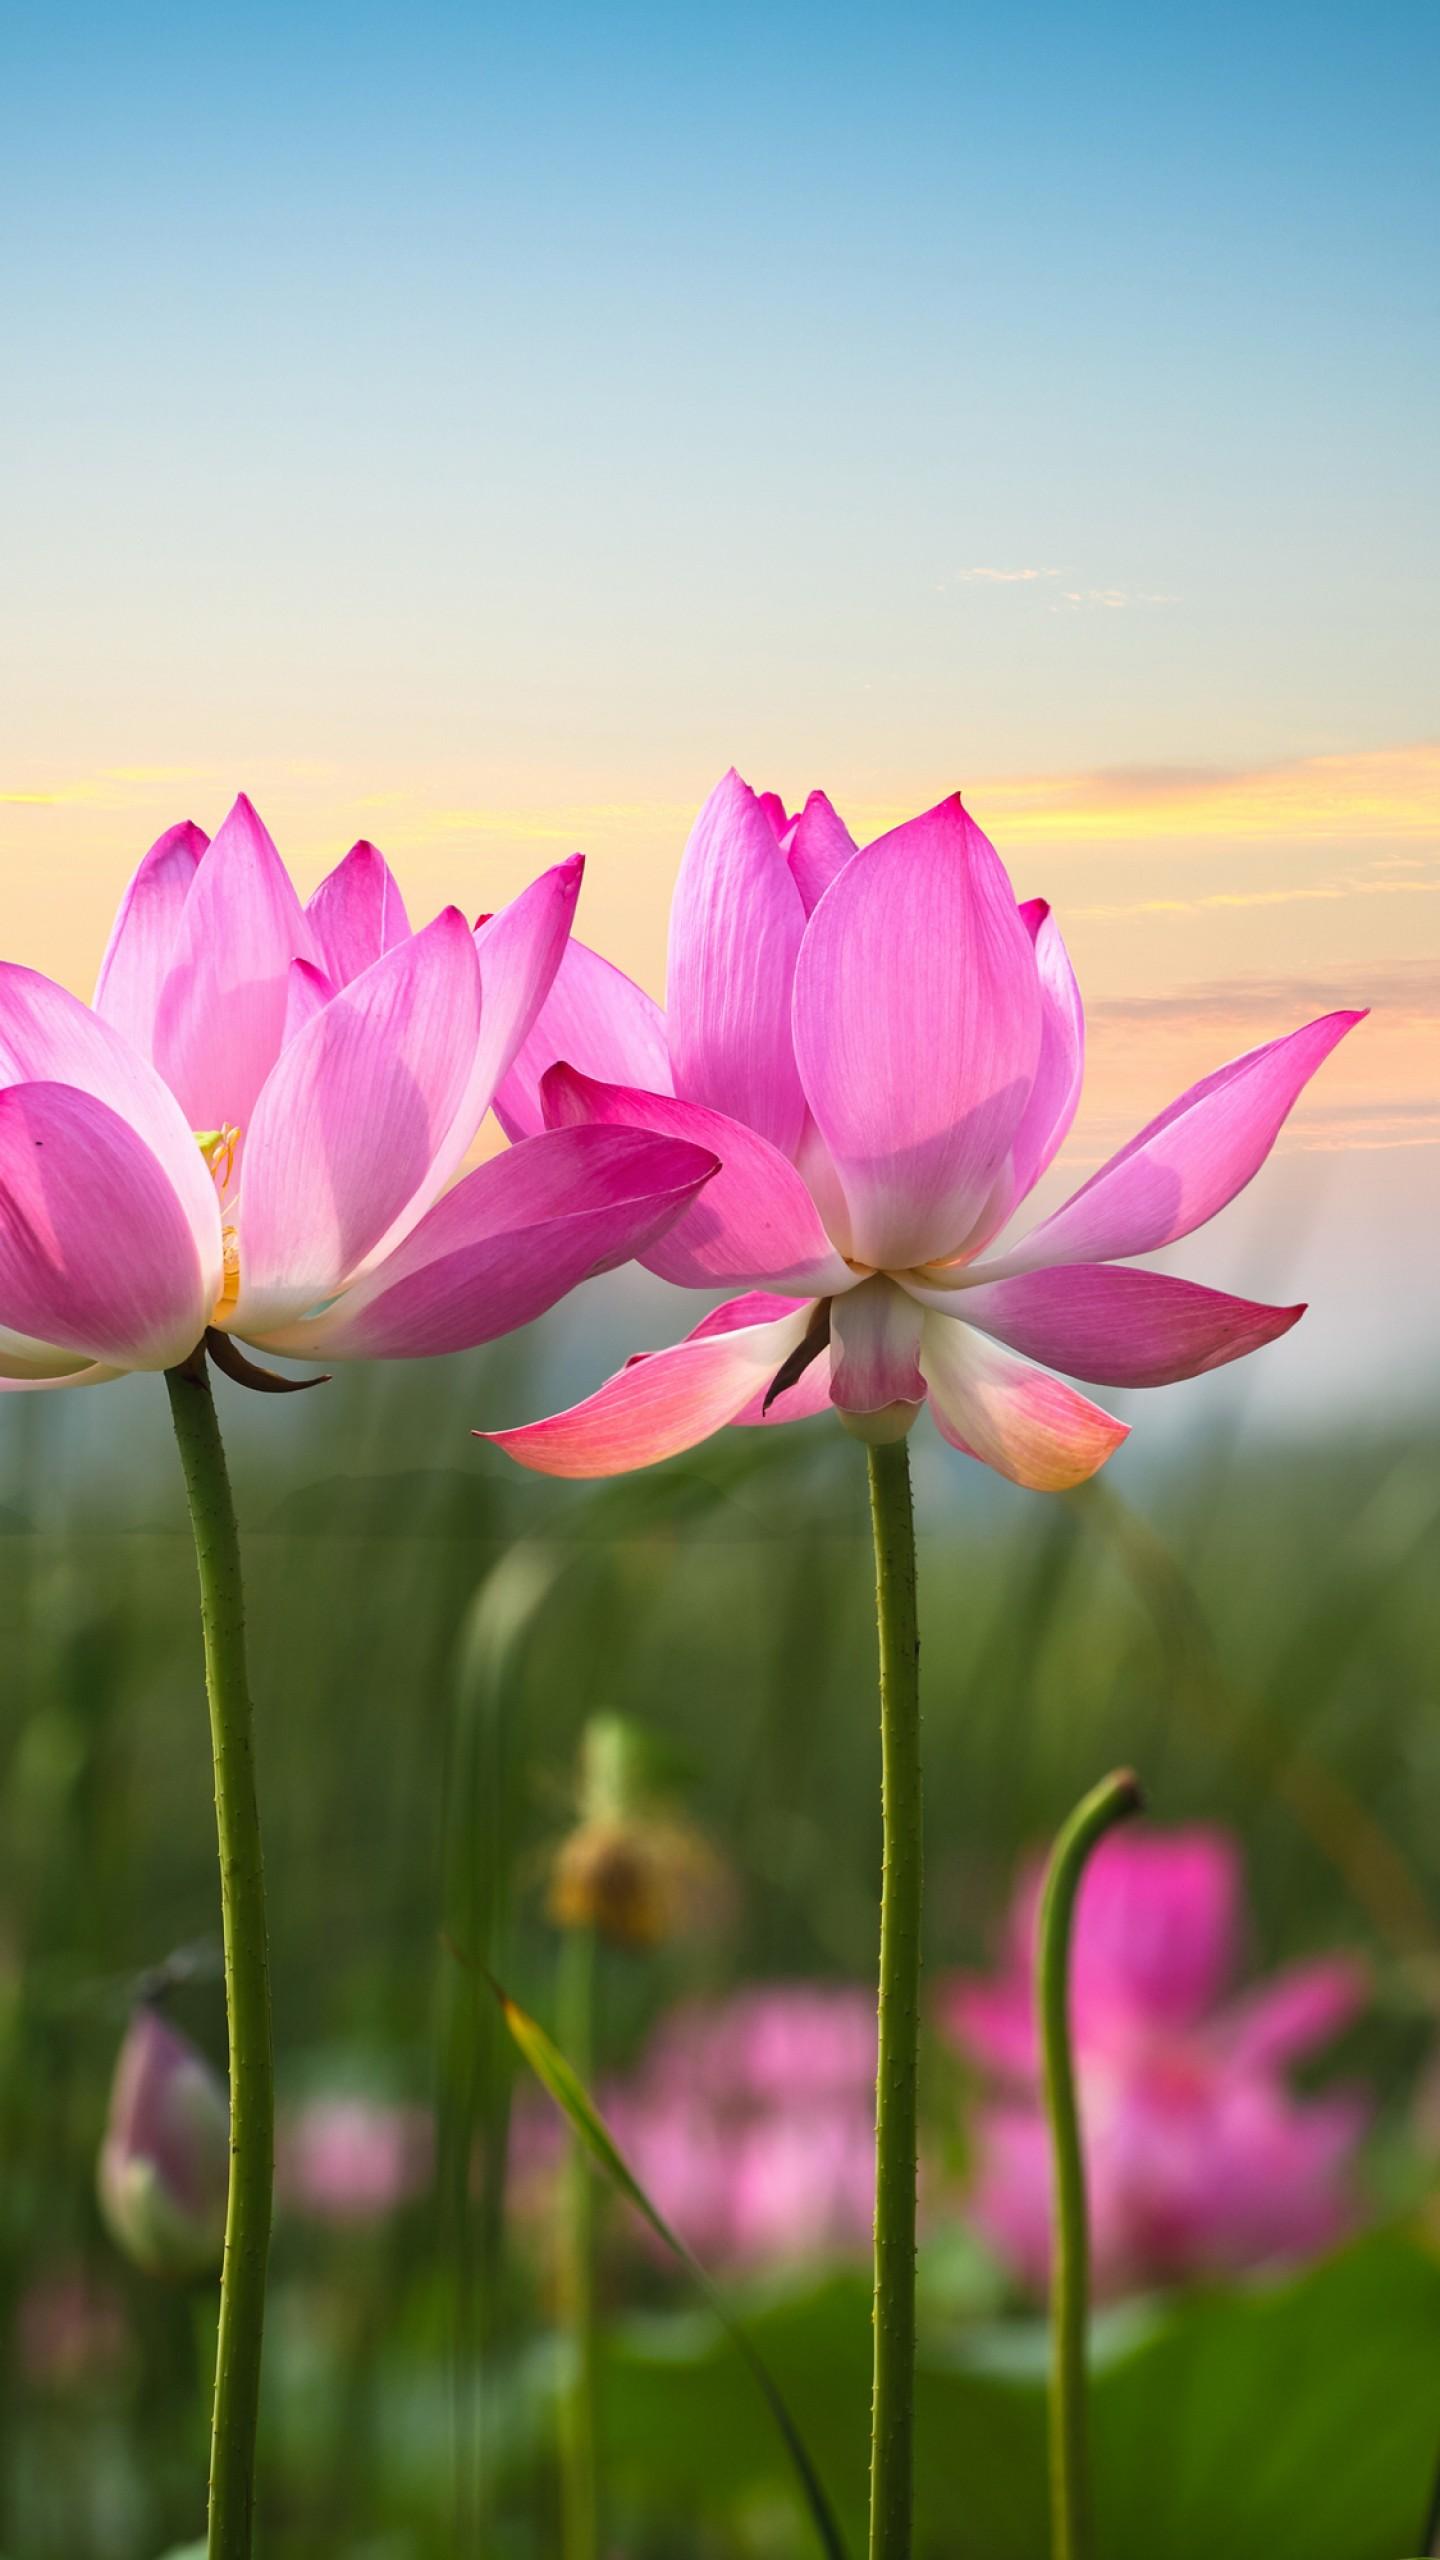 Lotus Flowers Beautiful Iconic Flowers That Stock Photo 2336456807 |  Shutterstock